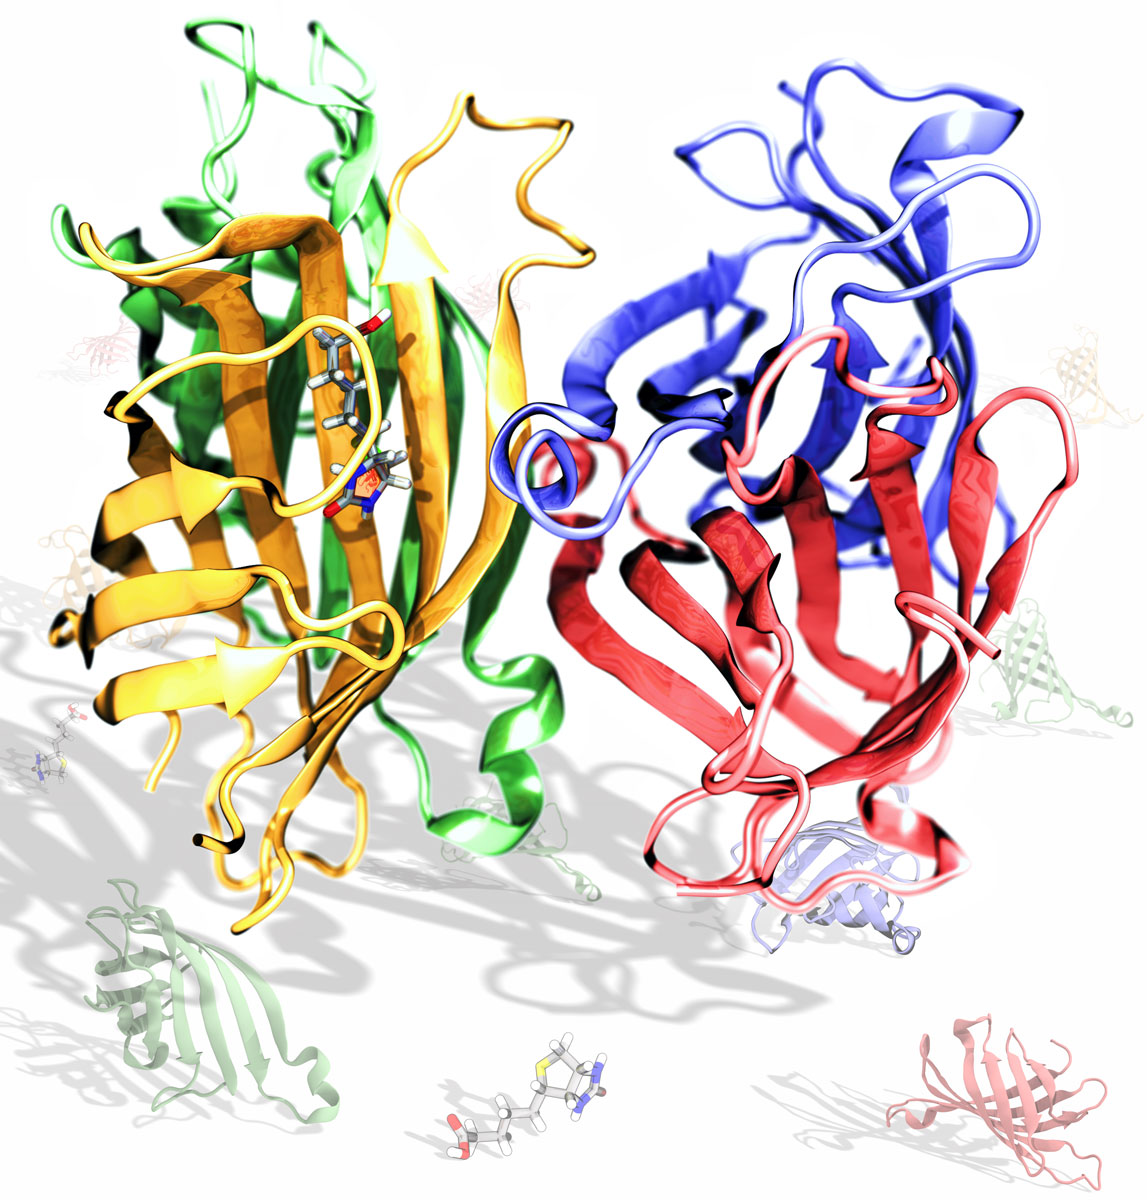 The protein structures of strepavidin binding to biotin